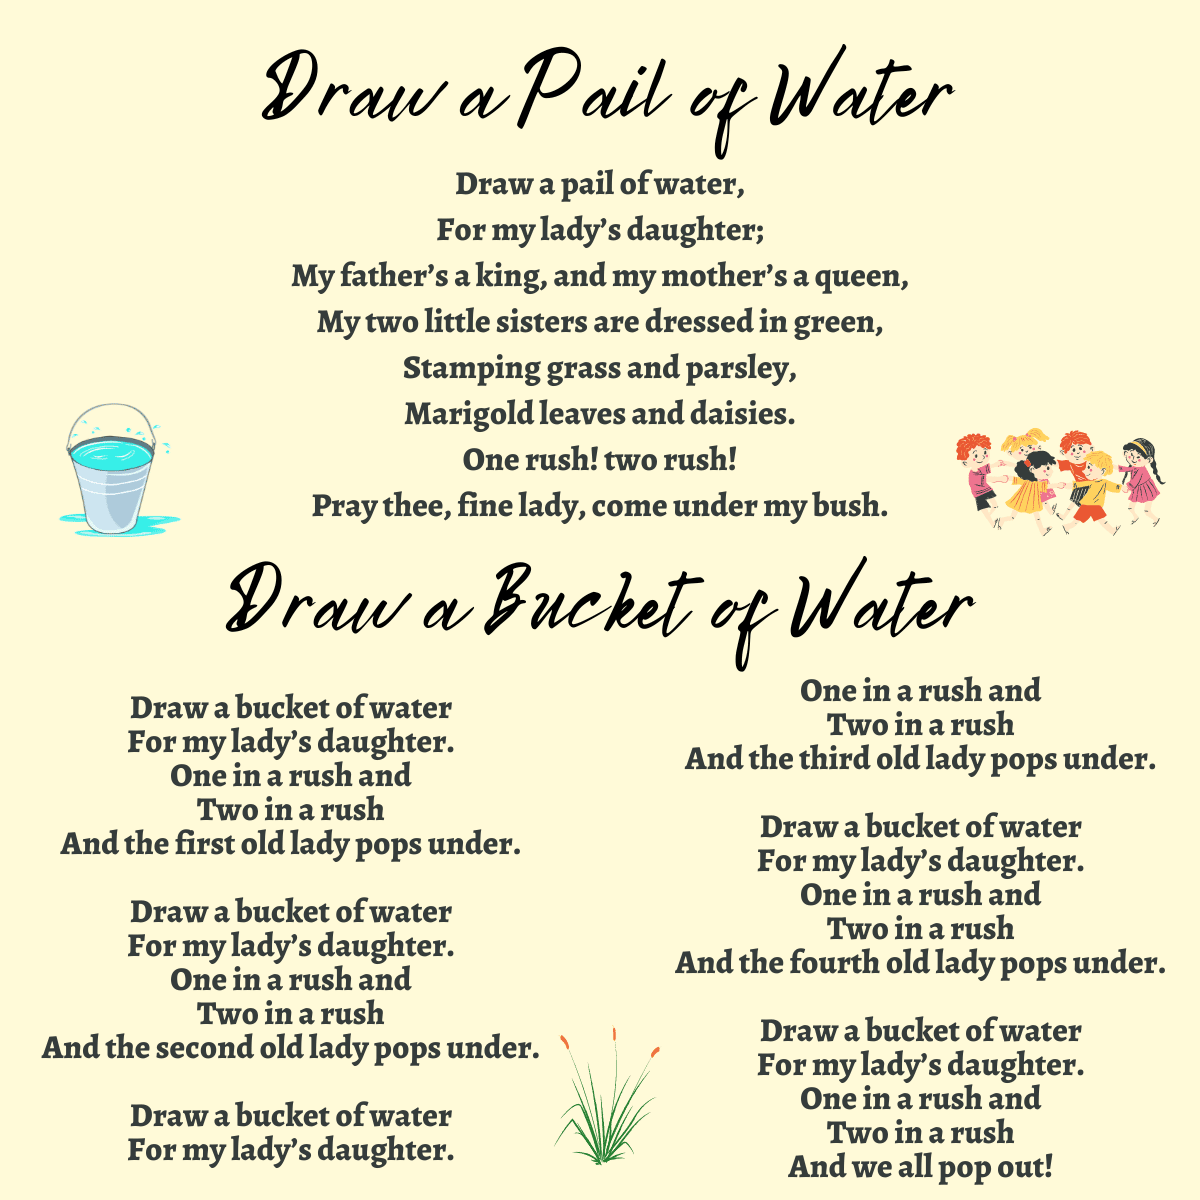 Draw A Pail of Water lyrics